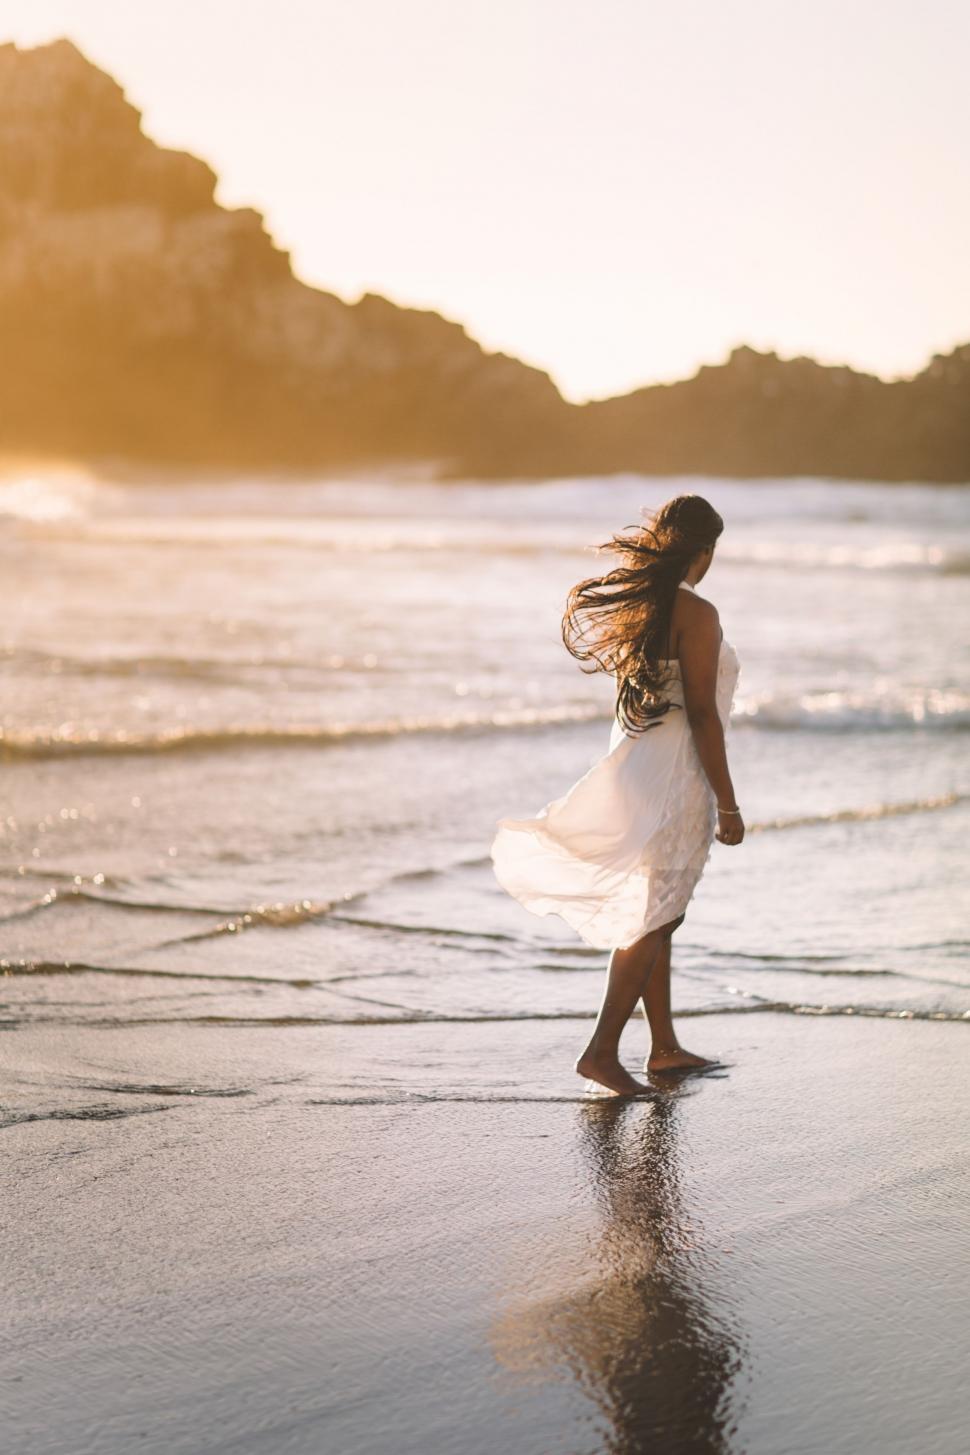 Free Image of Woman in White Dress Walking on Beach 